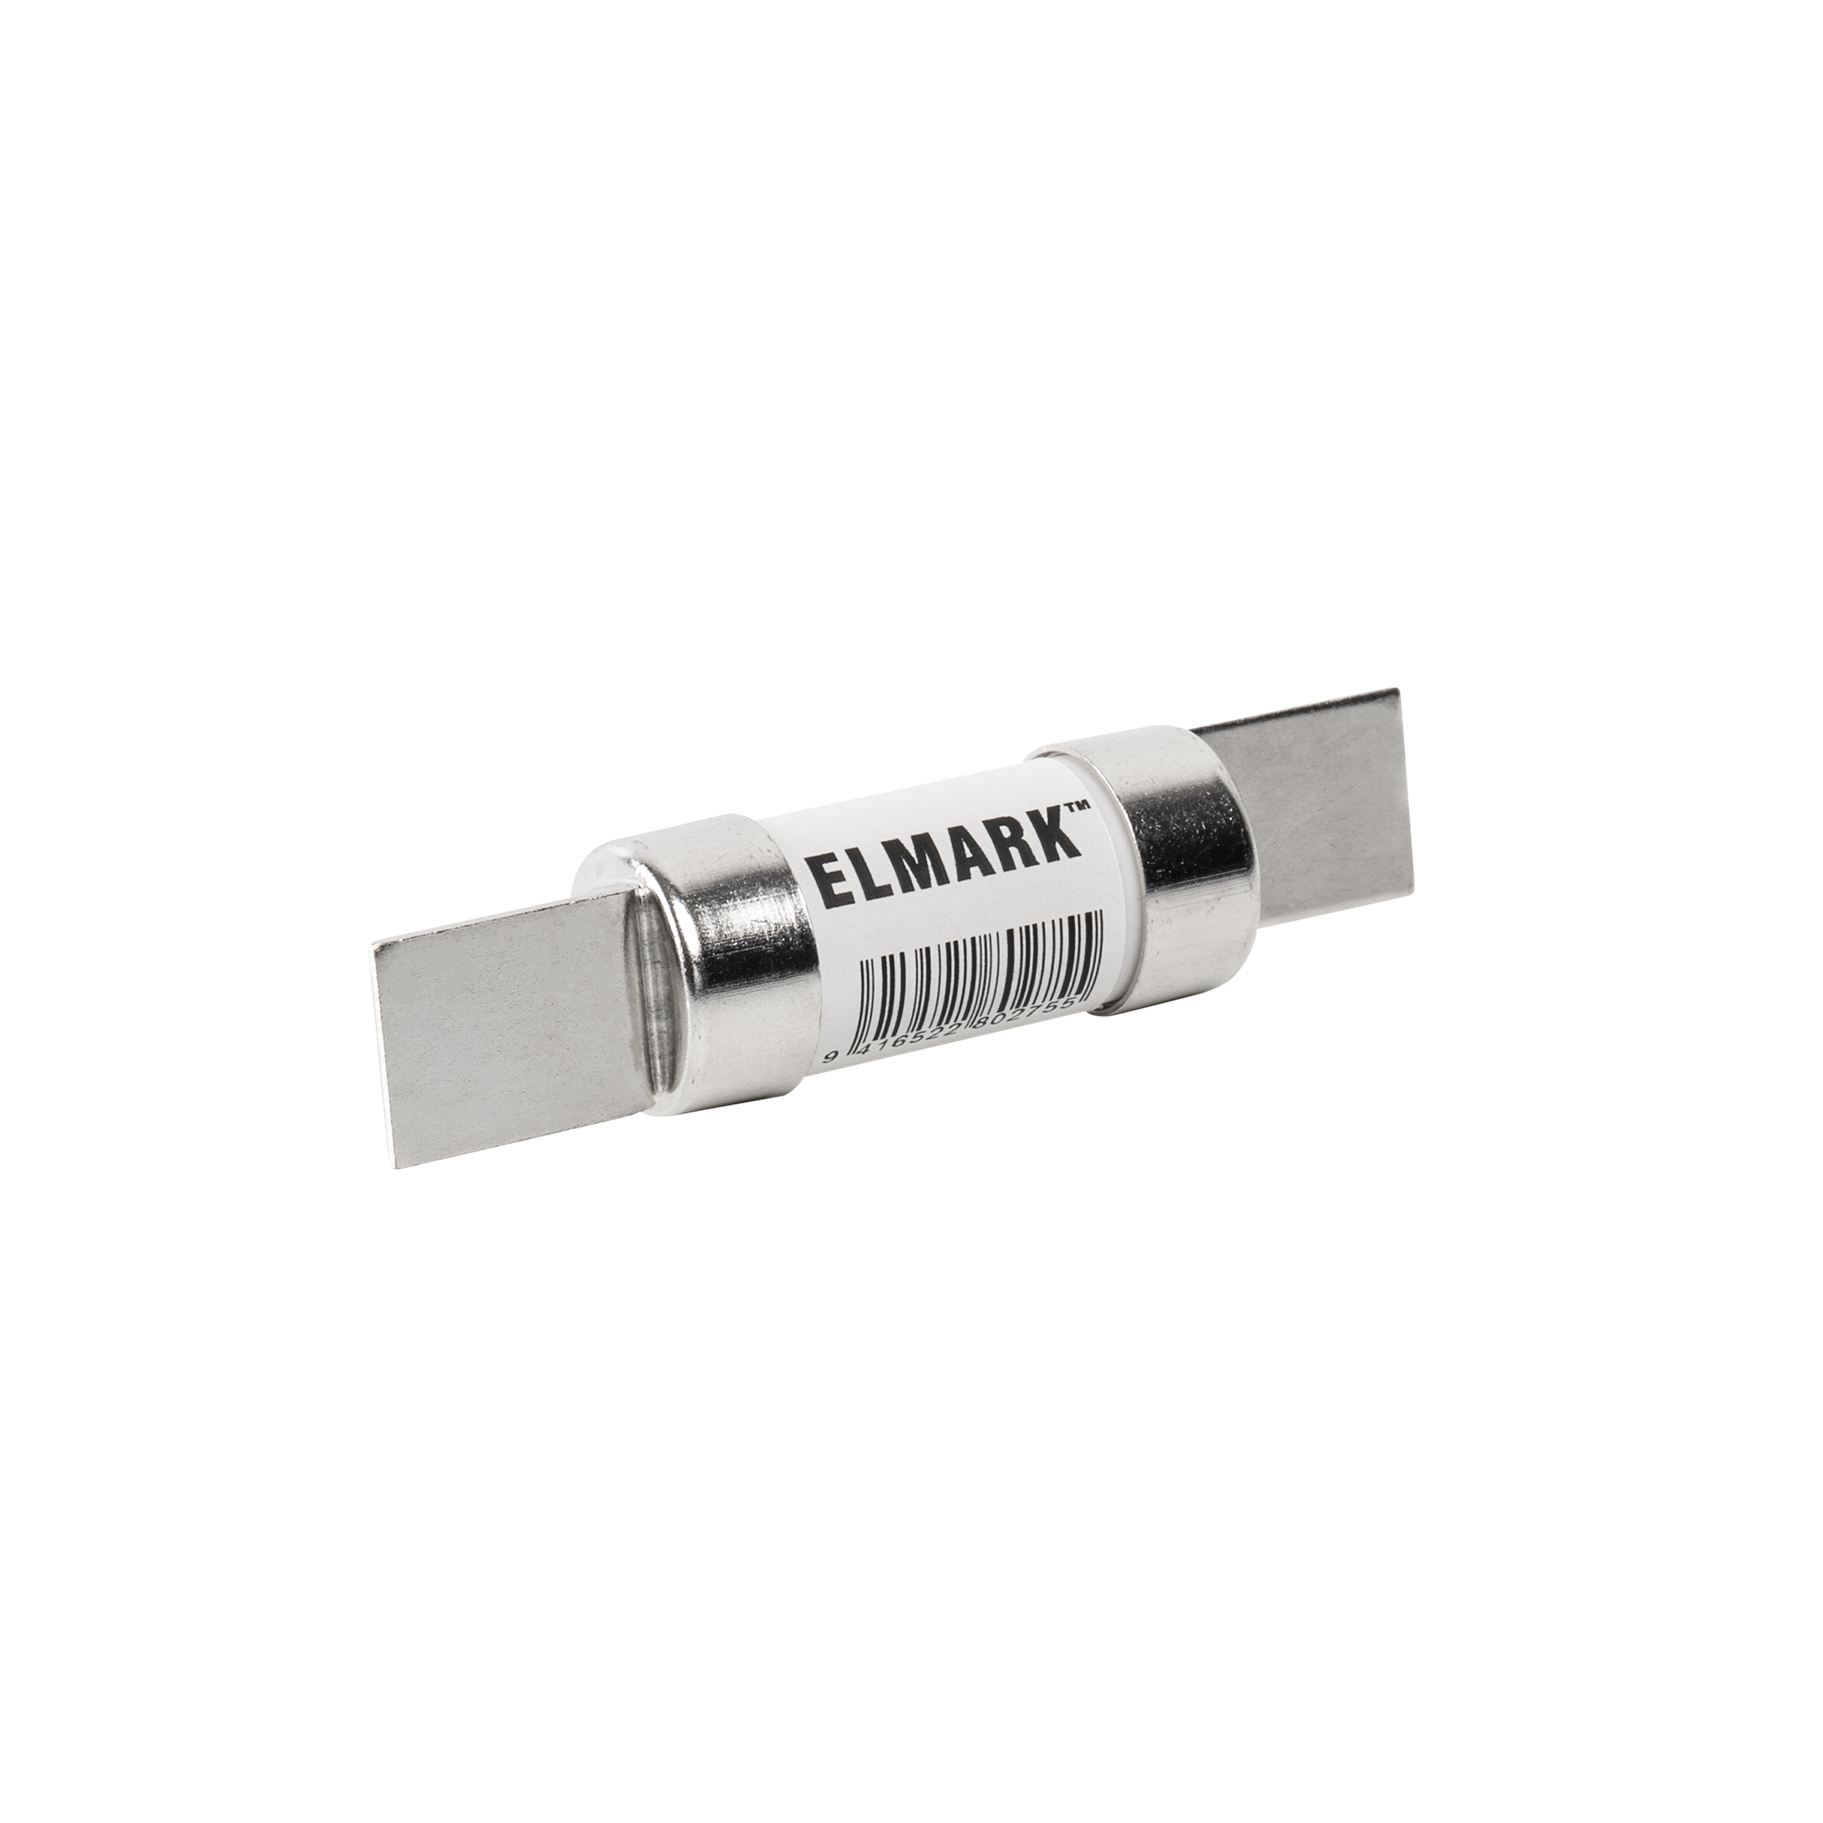 ELMARK HRC FUSE LINK STAGGERED TAG 2A 550V 2G06